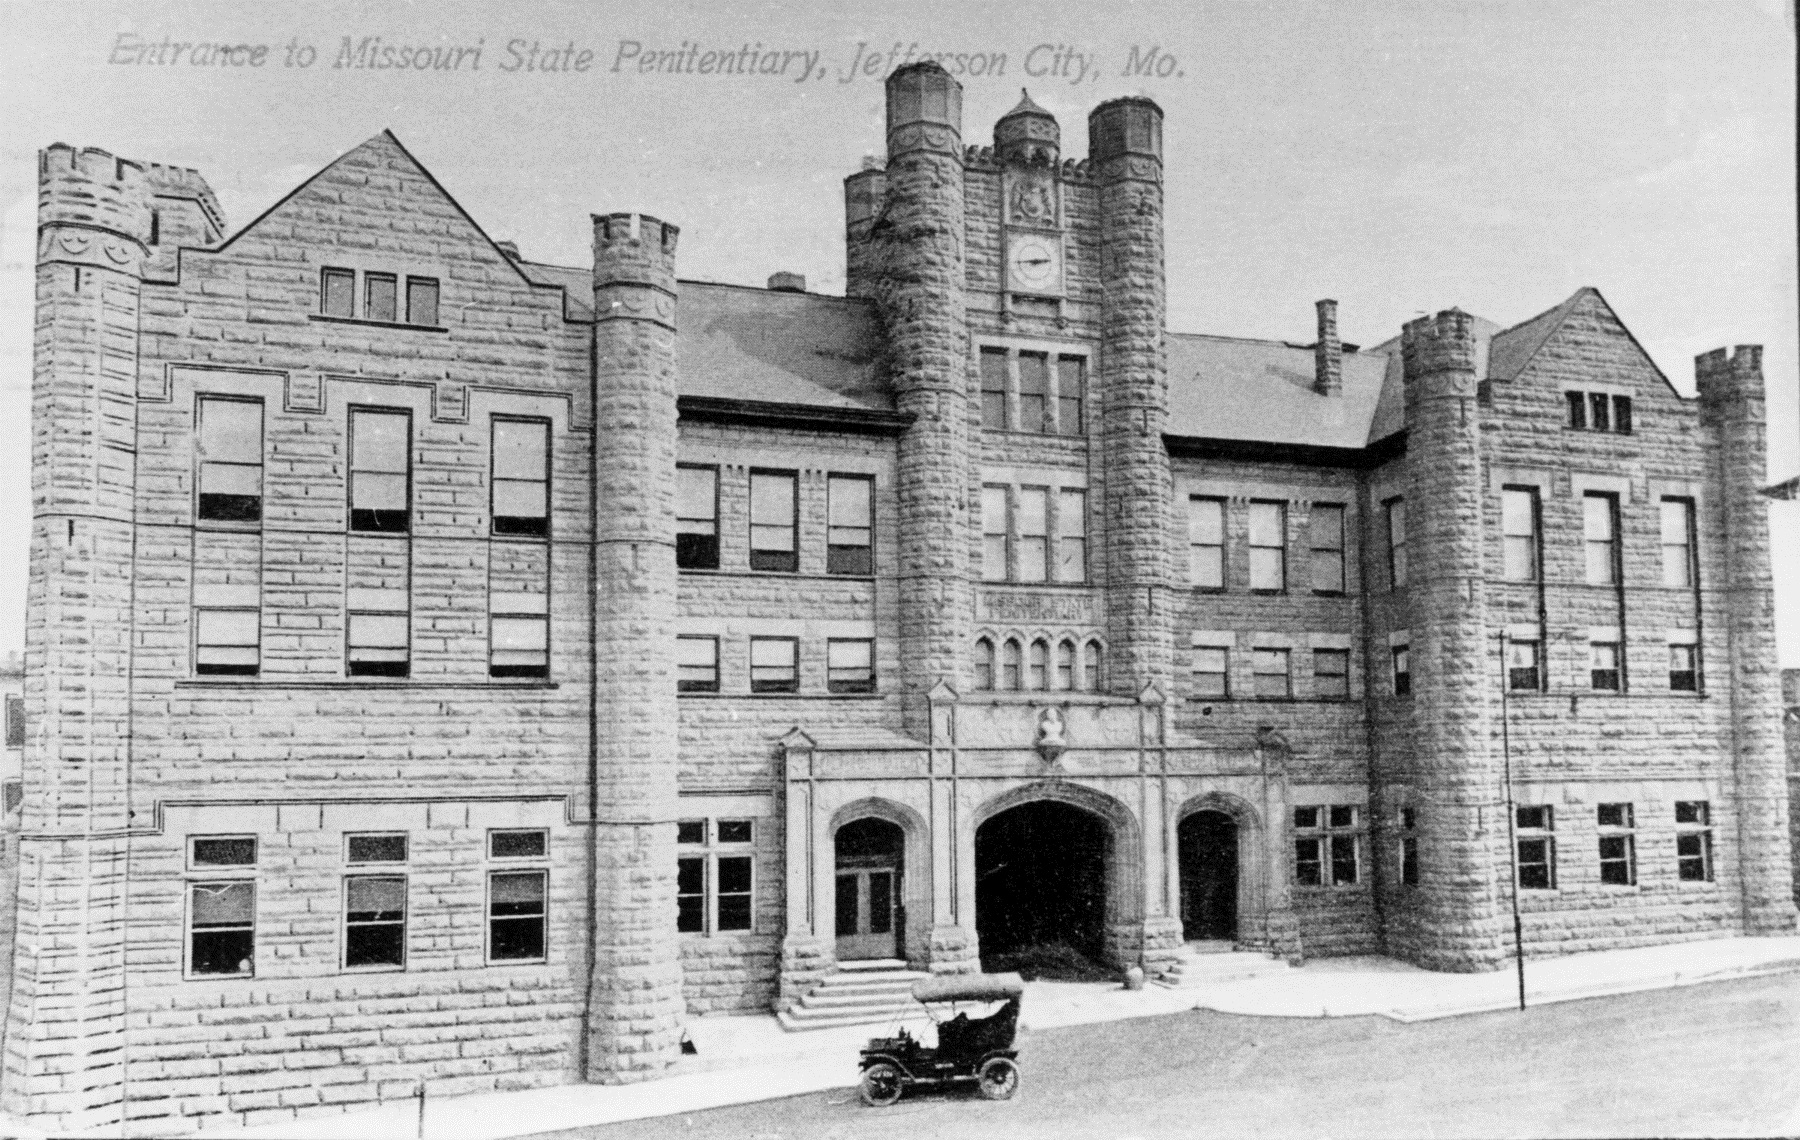 Missouri State Penitentiary entrance